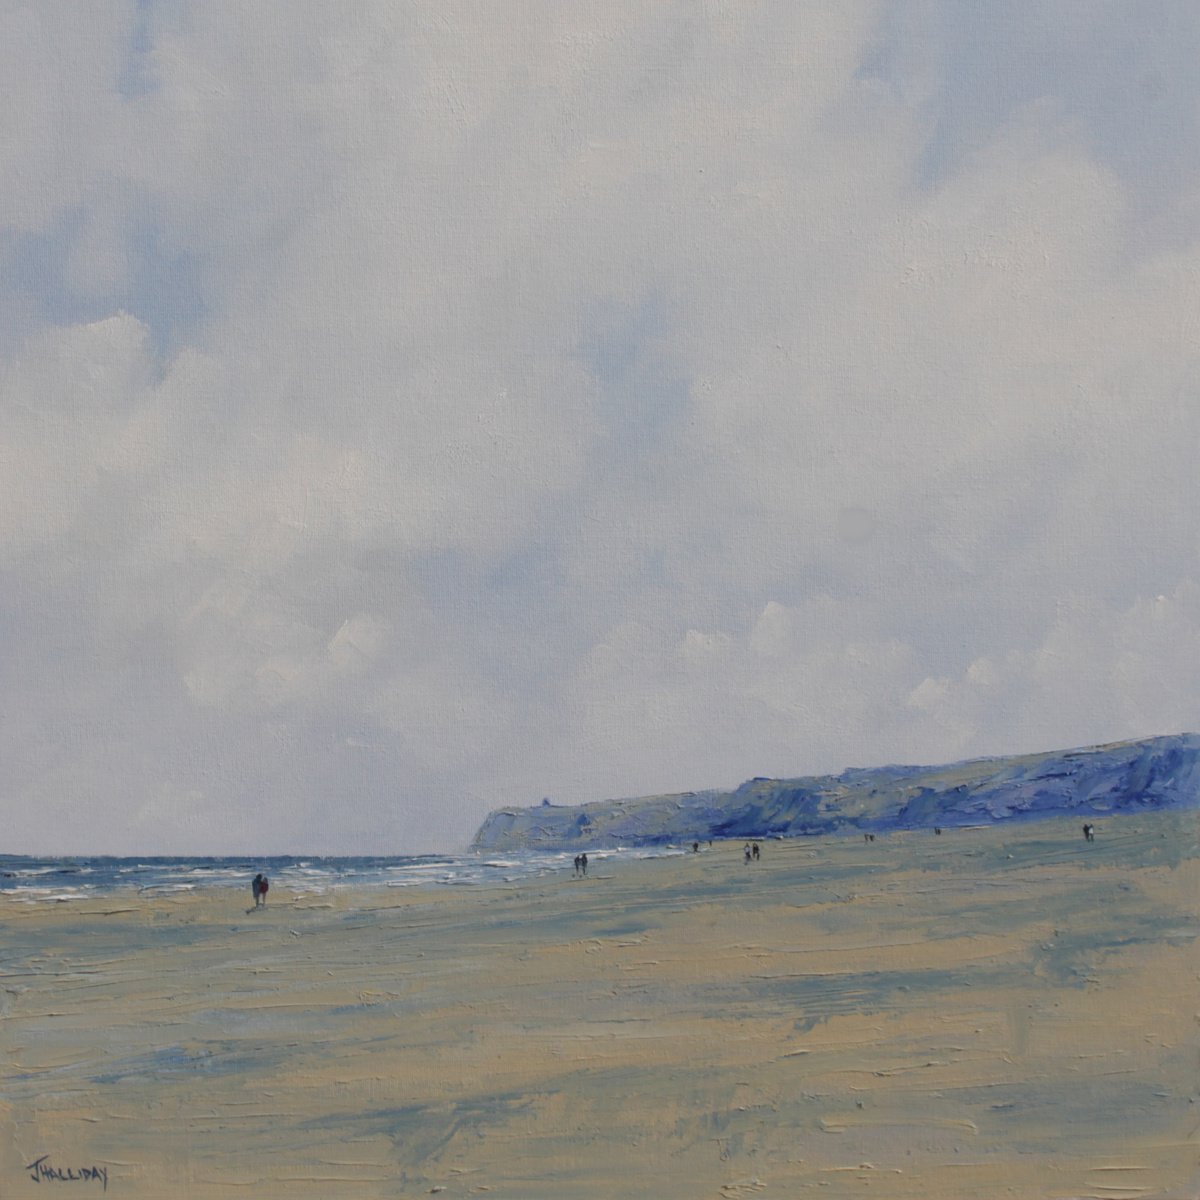 On Downhill Beach, Irish Landscape by John Halliday